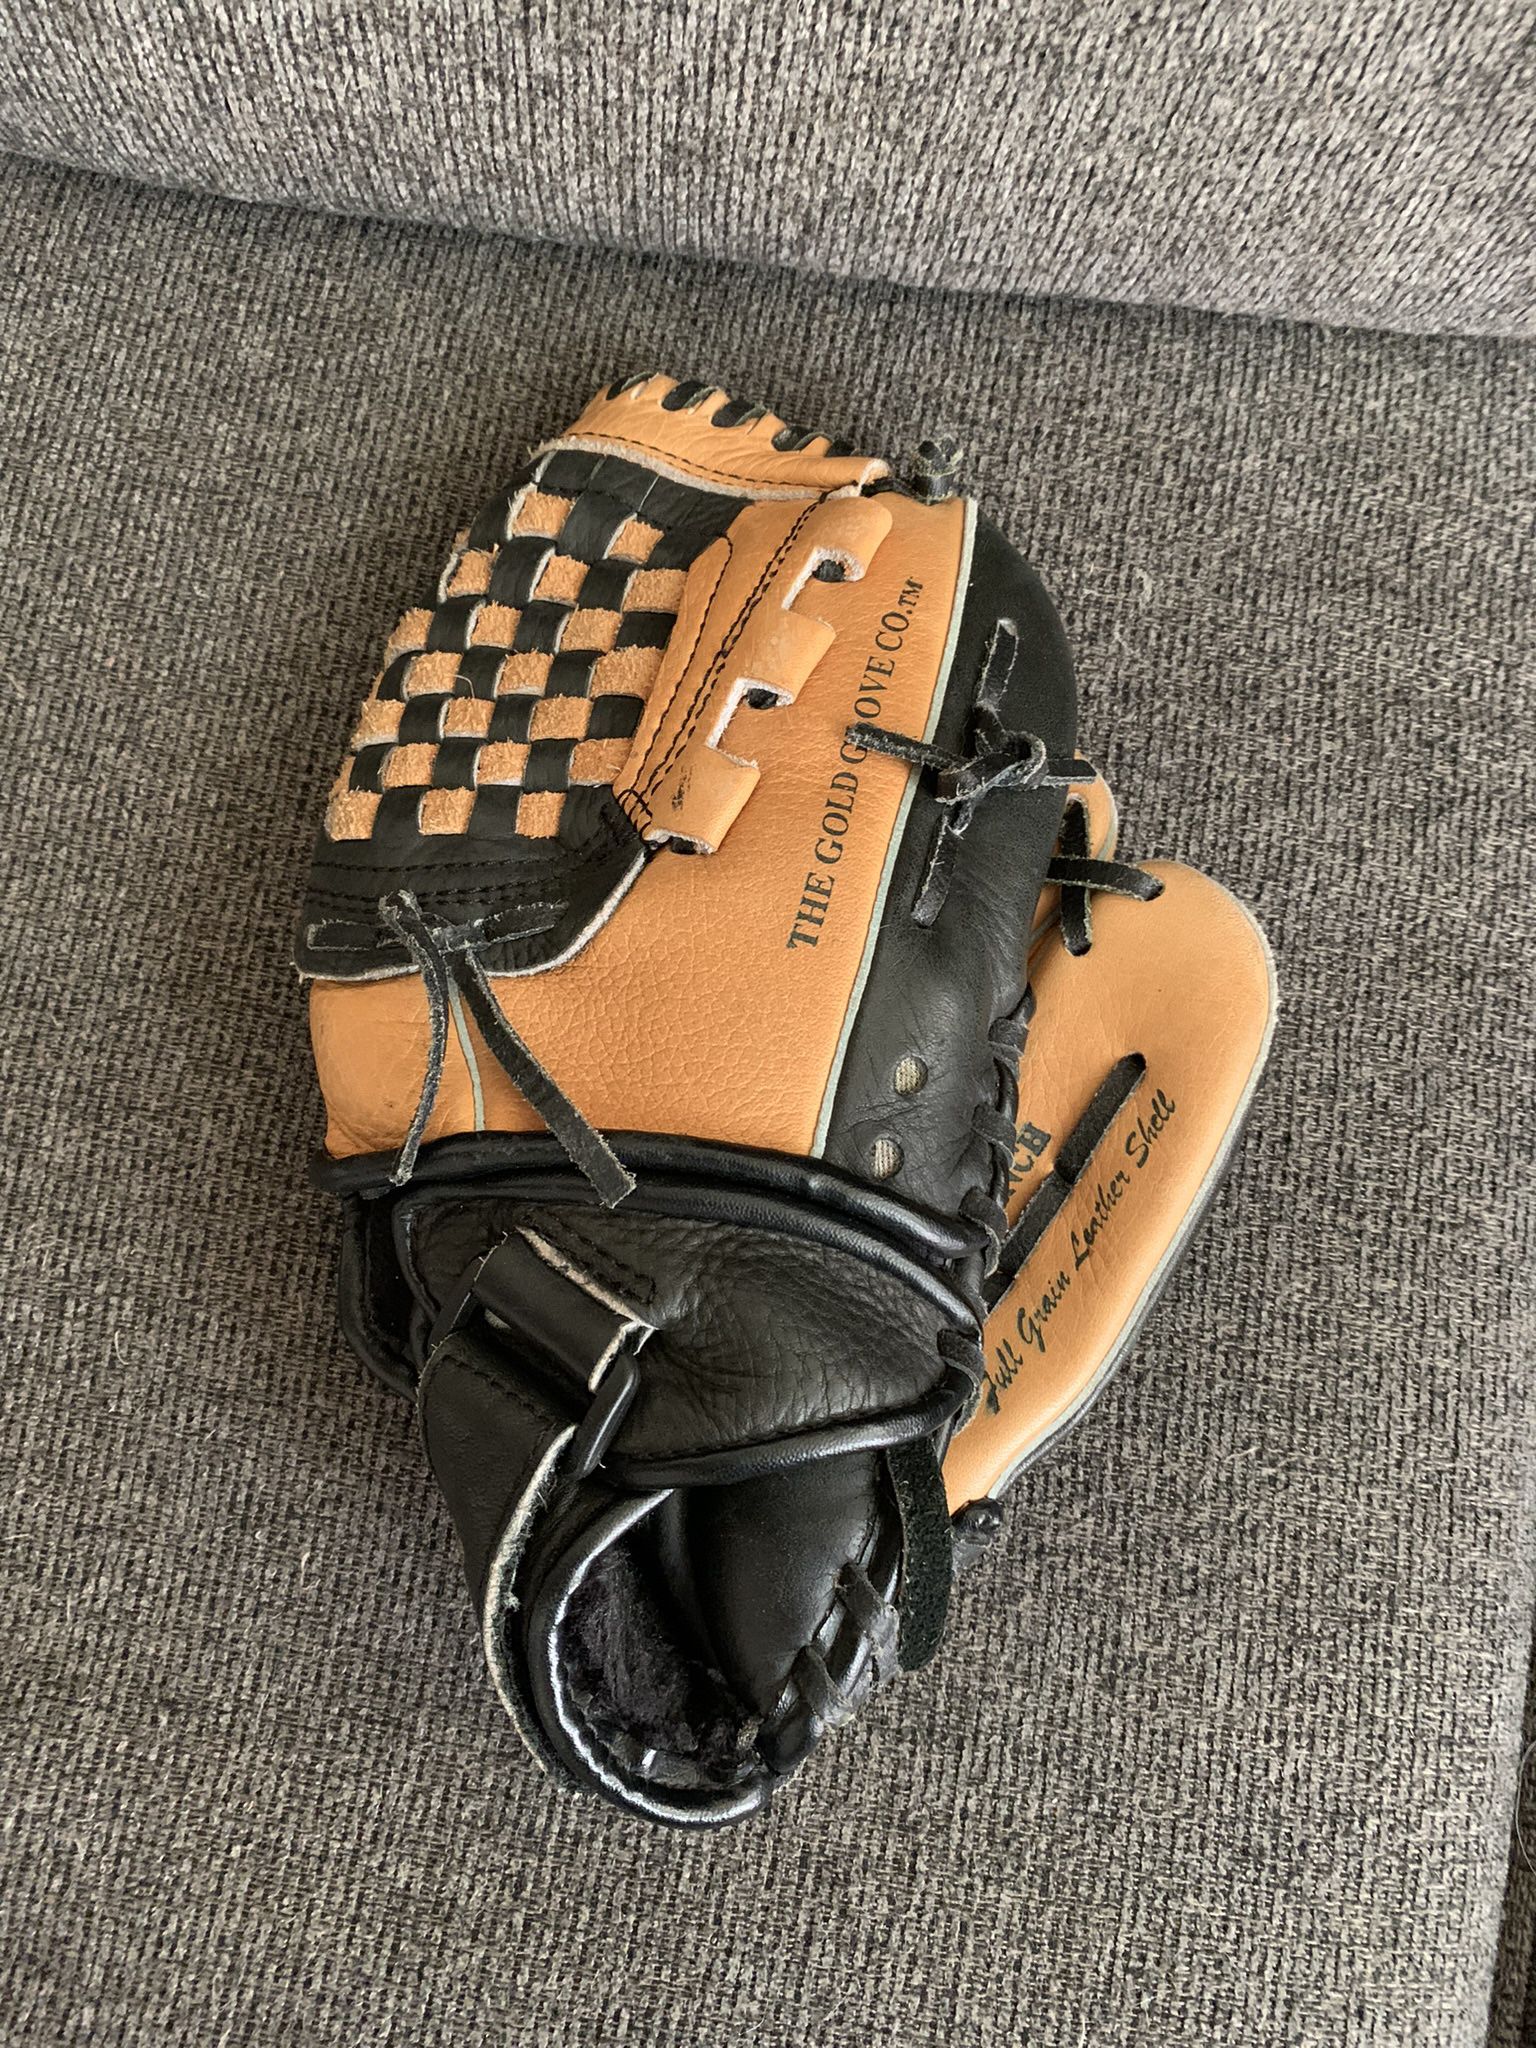 Rawlings Fastback PP80 10 1/2 Inch Full Grain Leather Baseball Glove